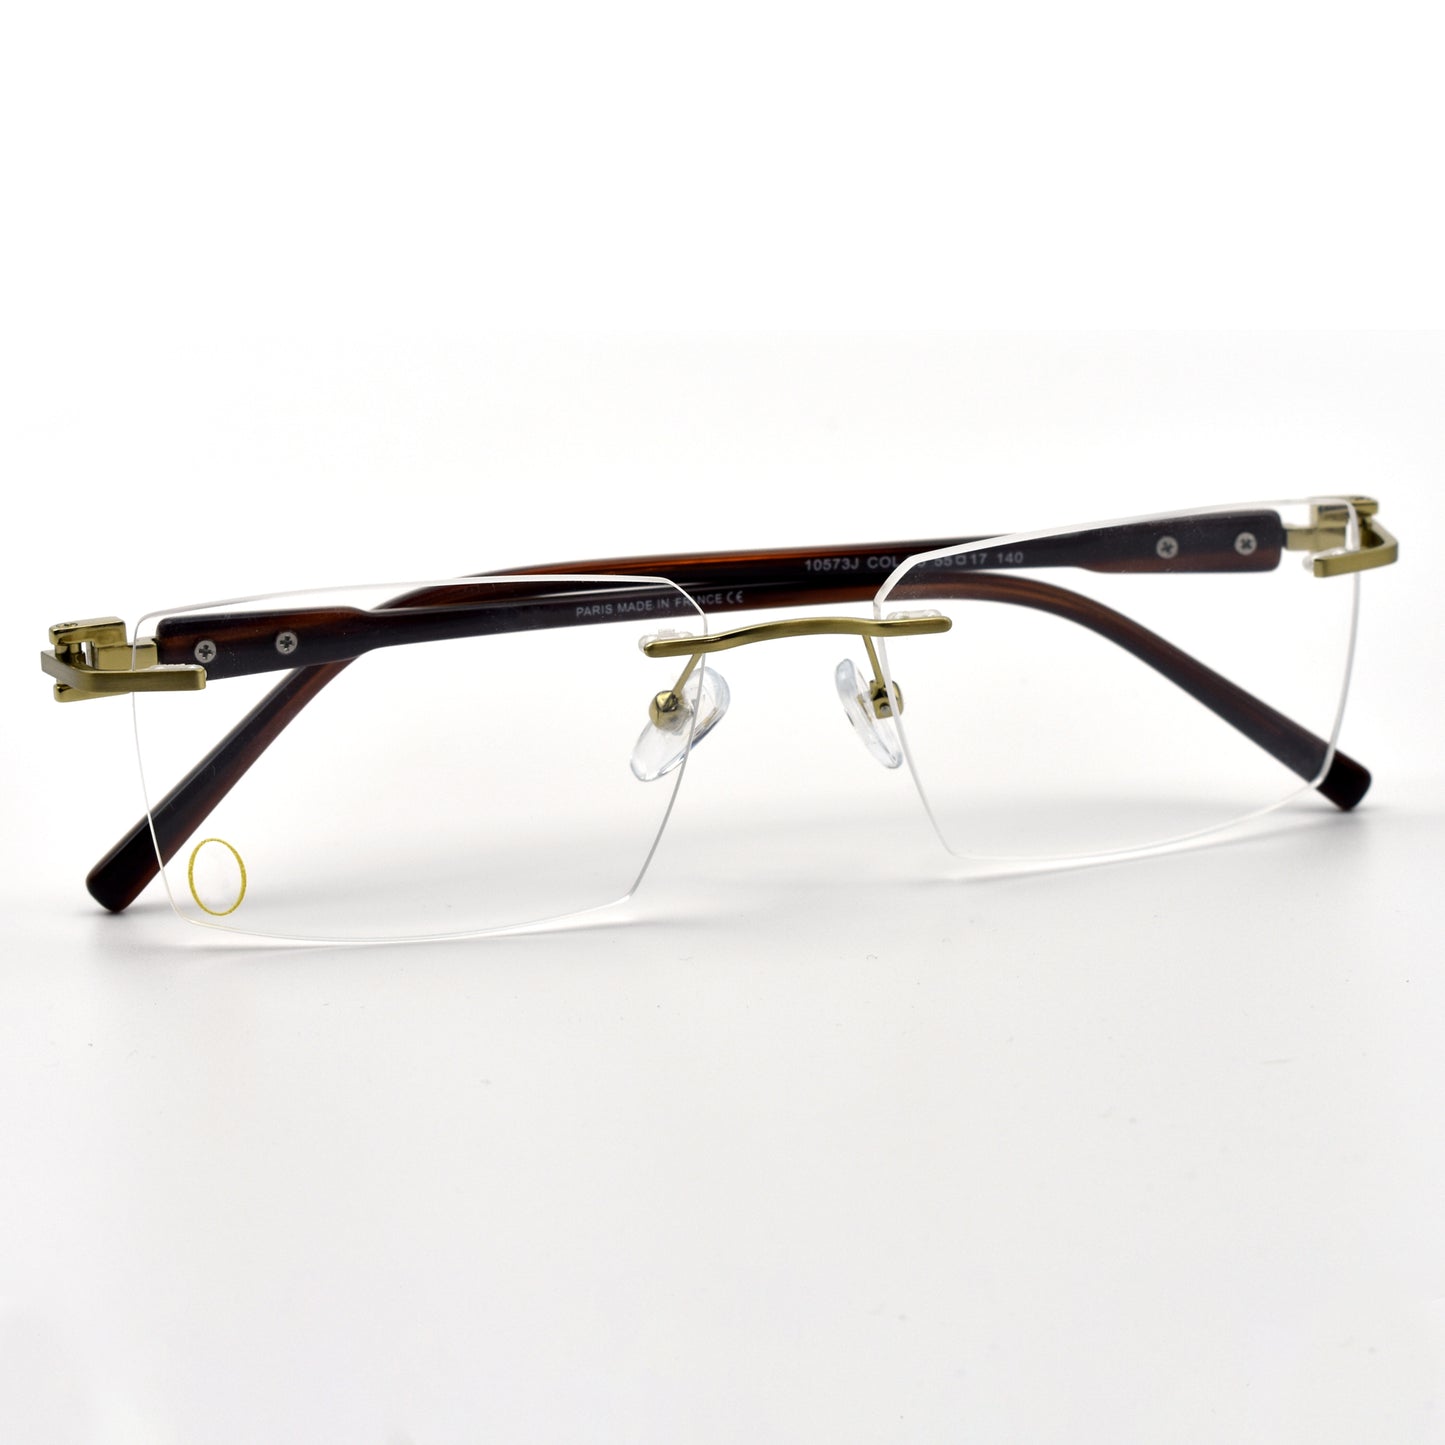 Modern Looking Trendy Stylish Optic Frame | CRTR Frame 04 | Premium Quality